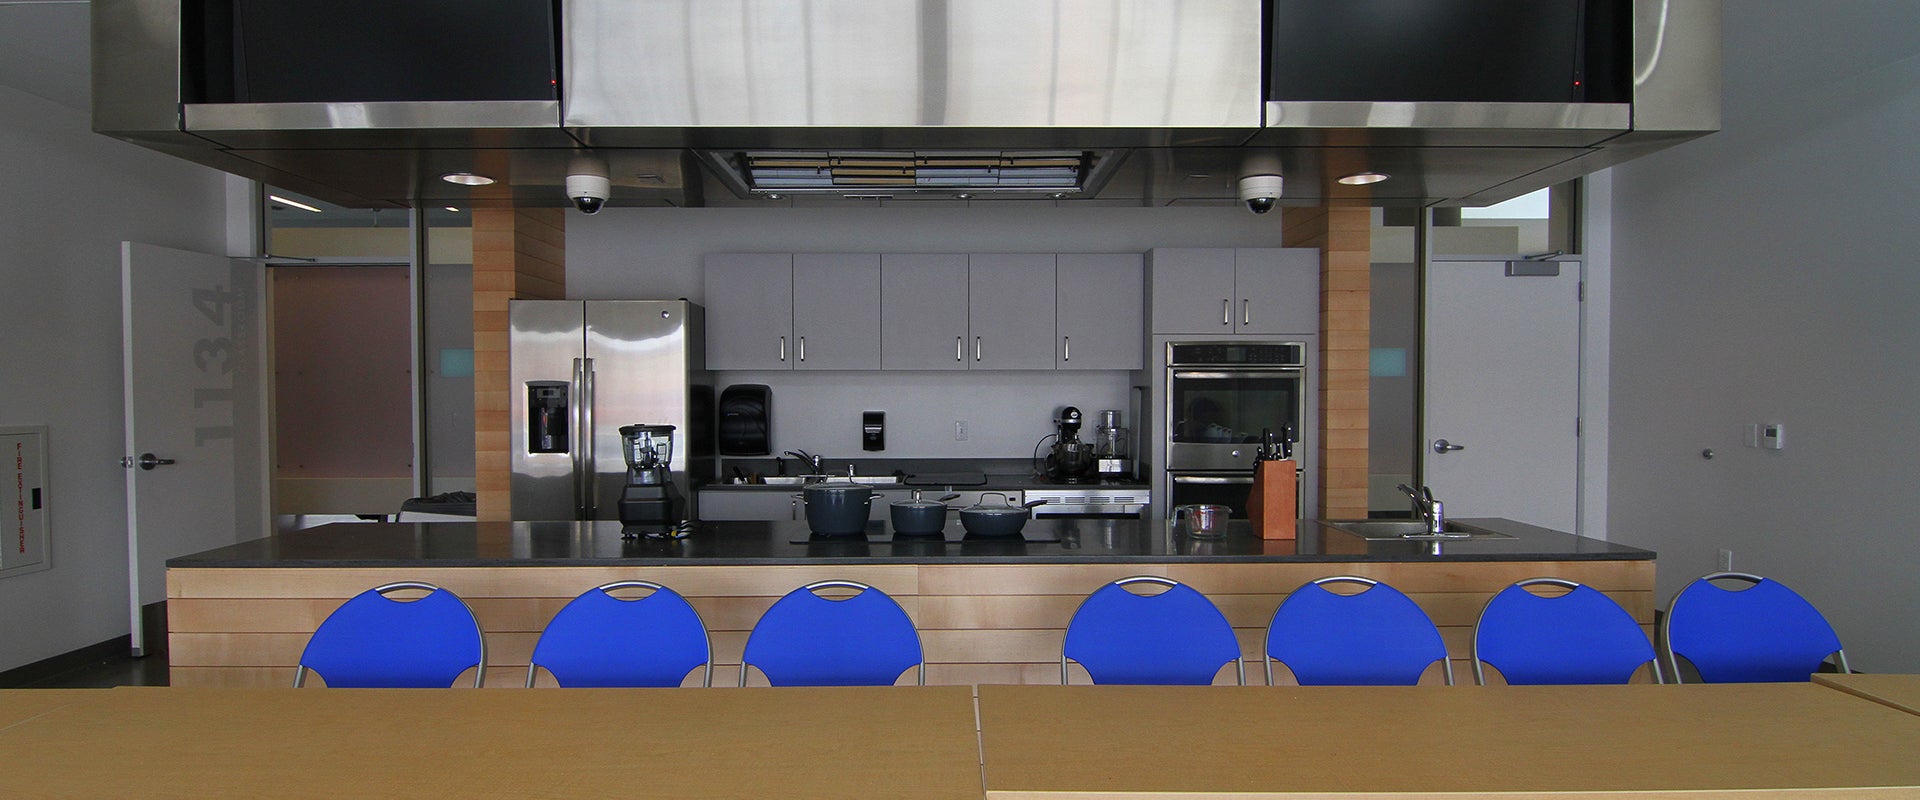 SRC Classroom Kitchen